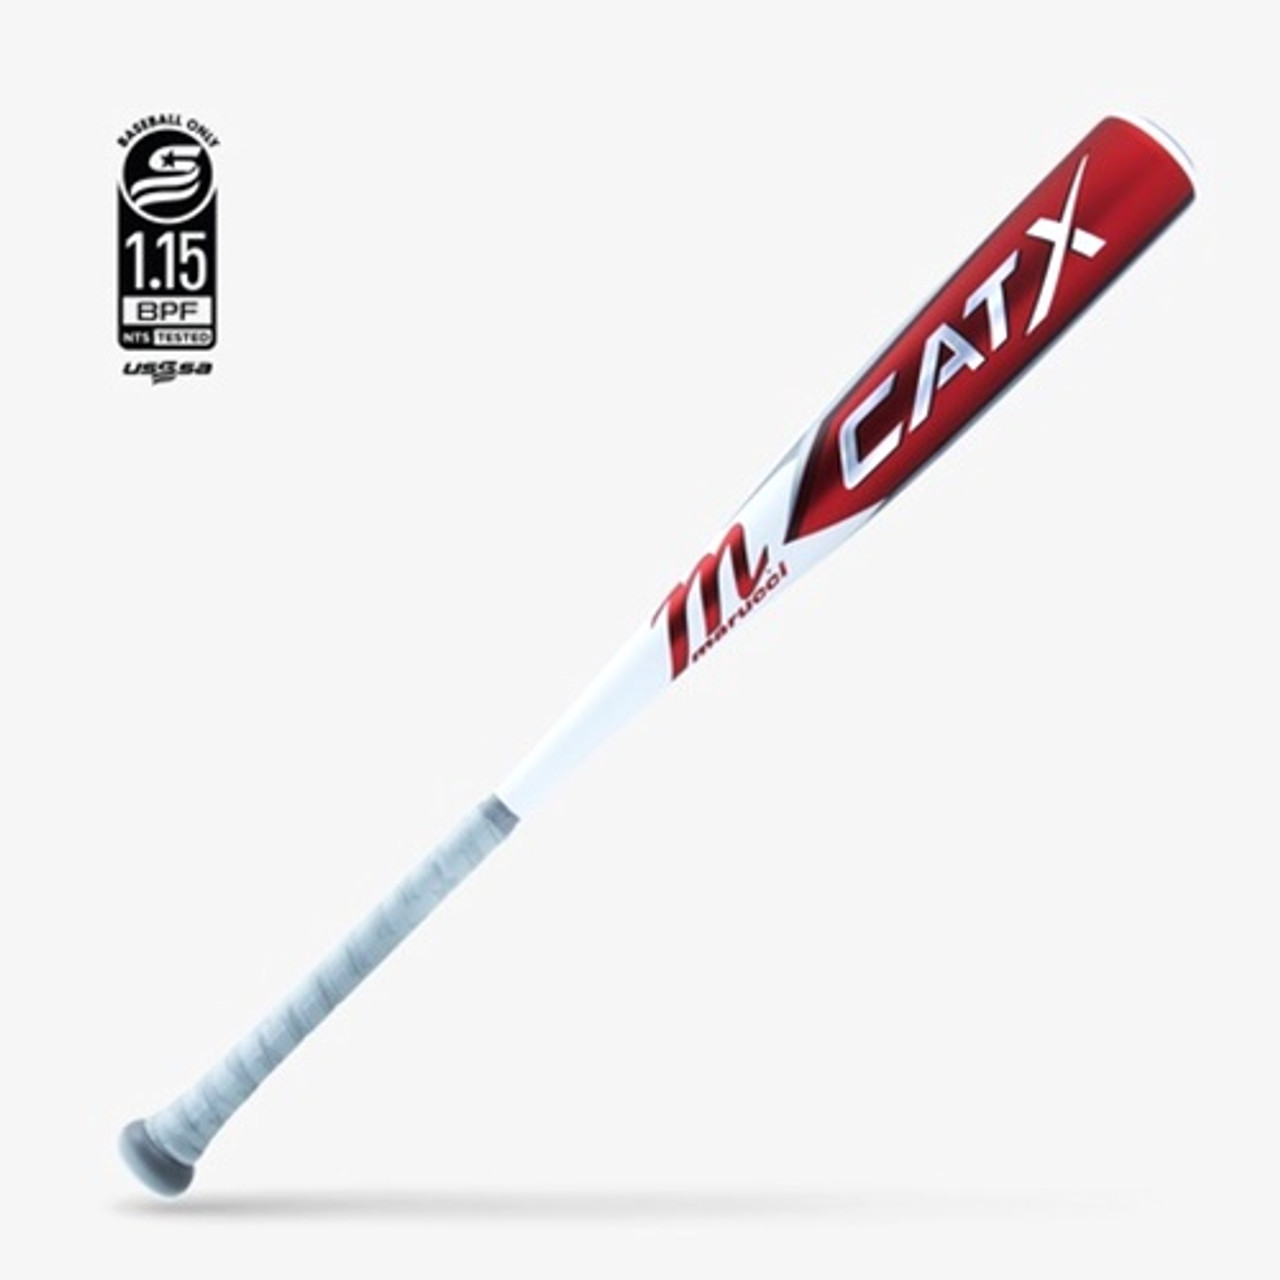 marucci-cat-x-10-baseball-bat-27-inch-17-oz MSBCX10-2717   The CATX baseball bat boasts a number of advanced features for